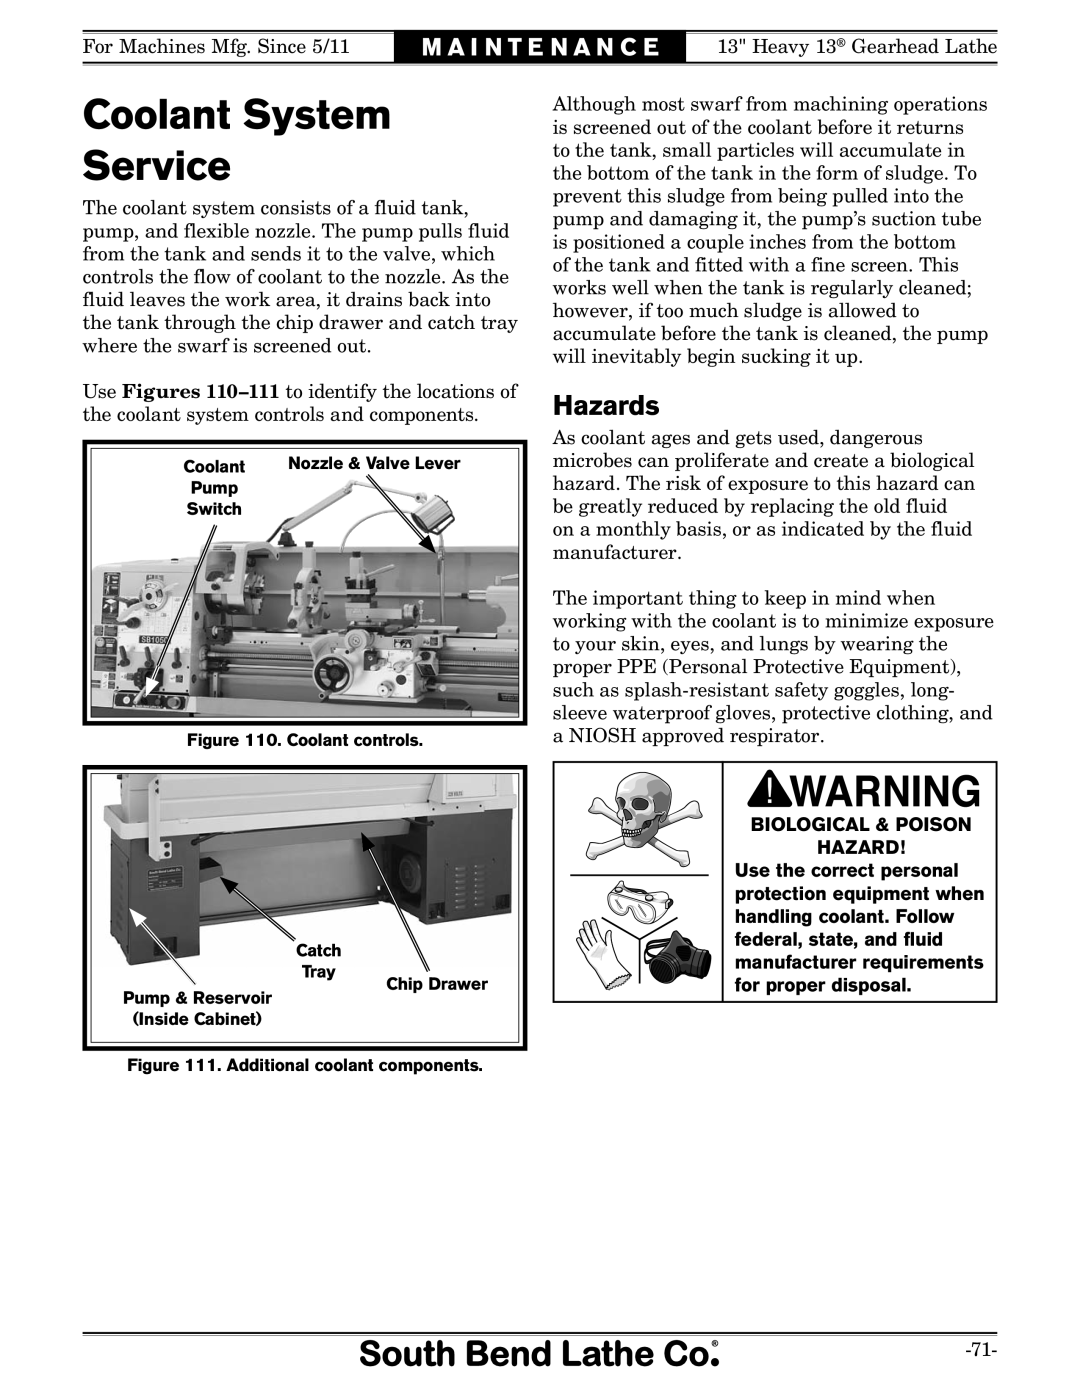 Southbend SB Coolant System Service, Hazards, for proper disposal, M A I N T E N A N C E, Biological & Poison Hazard 